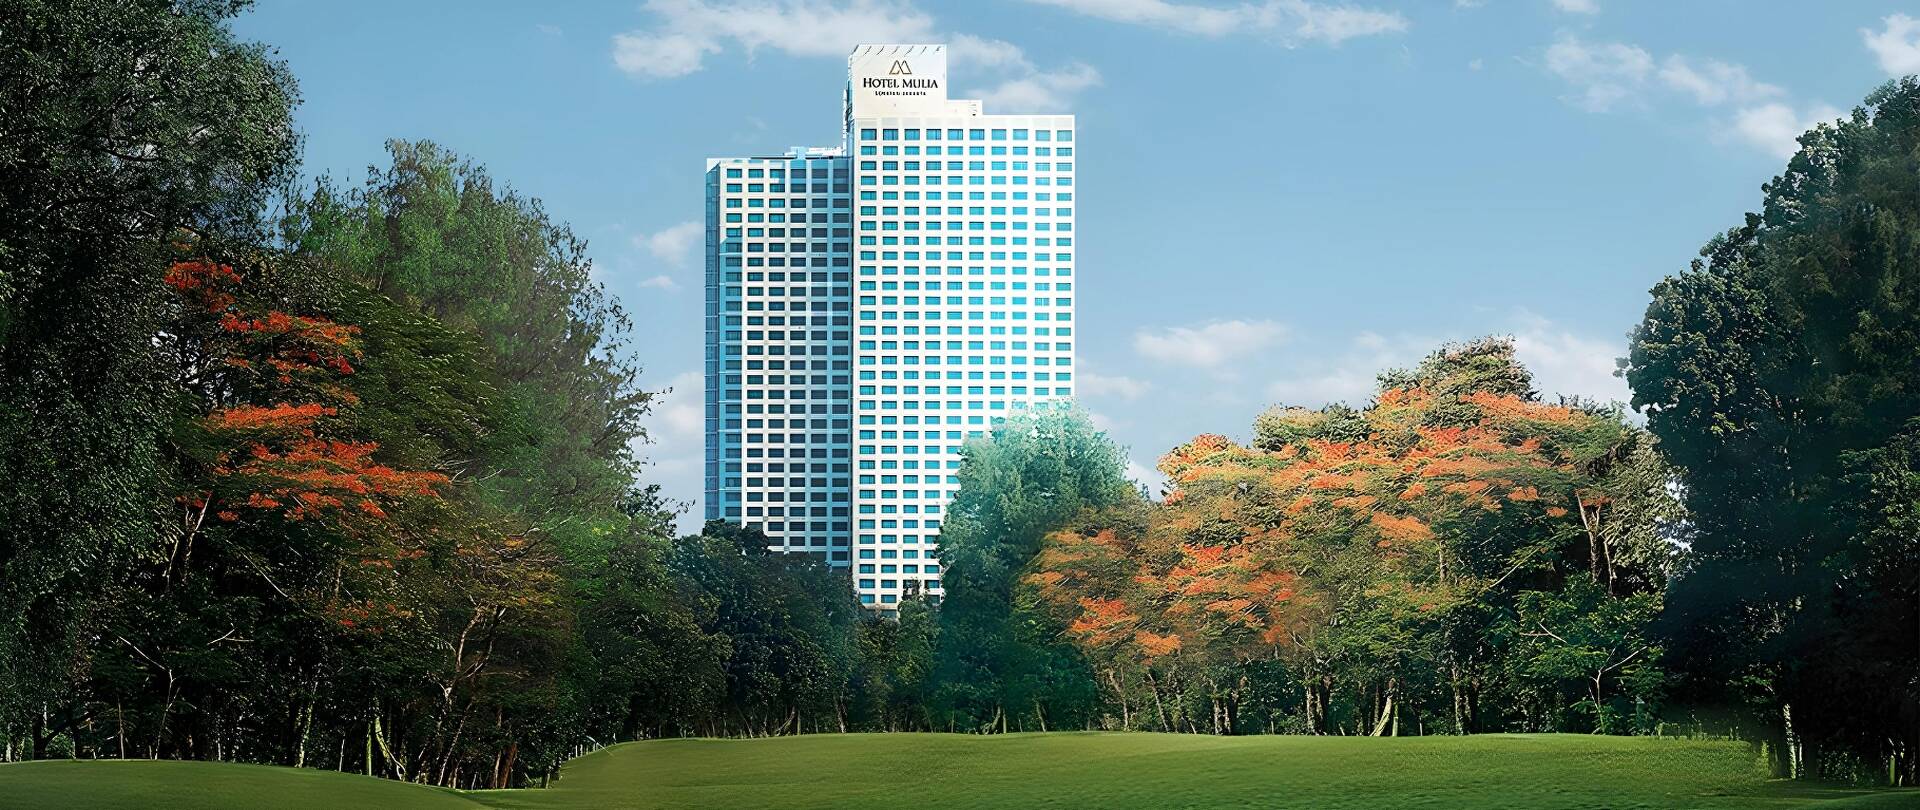 Meeting RFP | Hotel Mulia Senayan, Jakarta